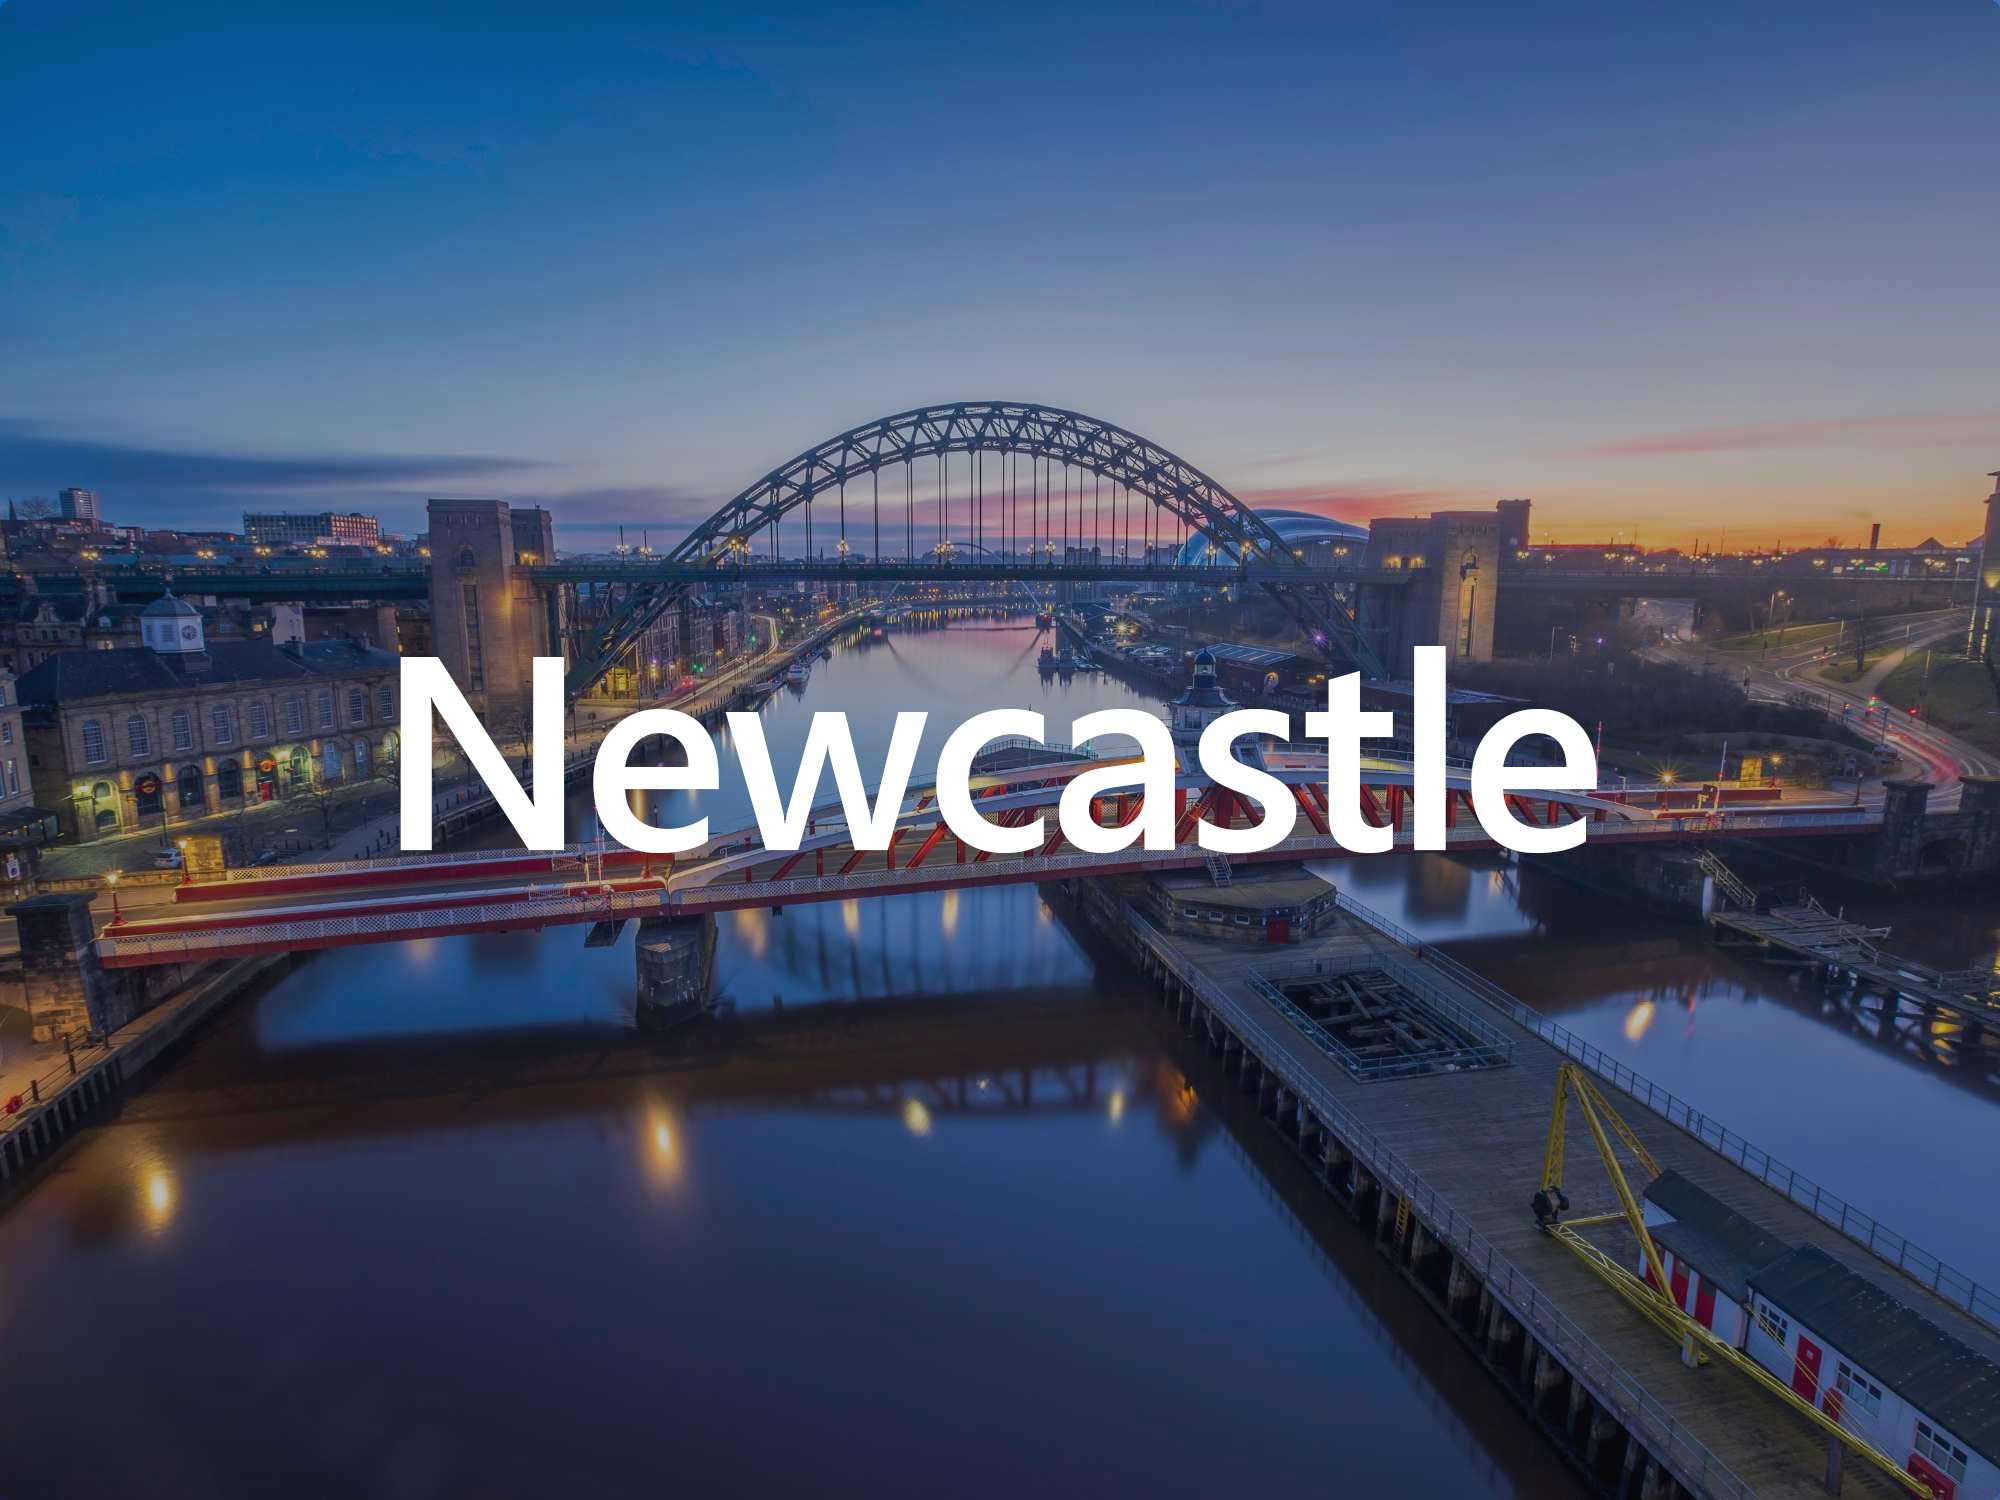 Cheap Hen Party Destinations - Newcastle